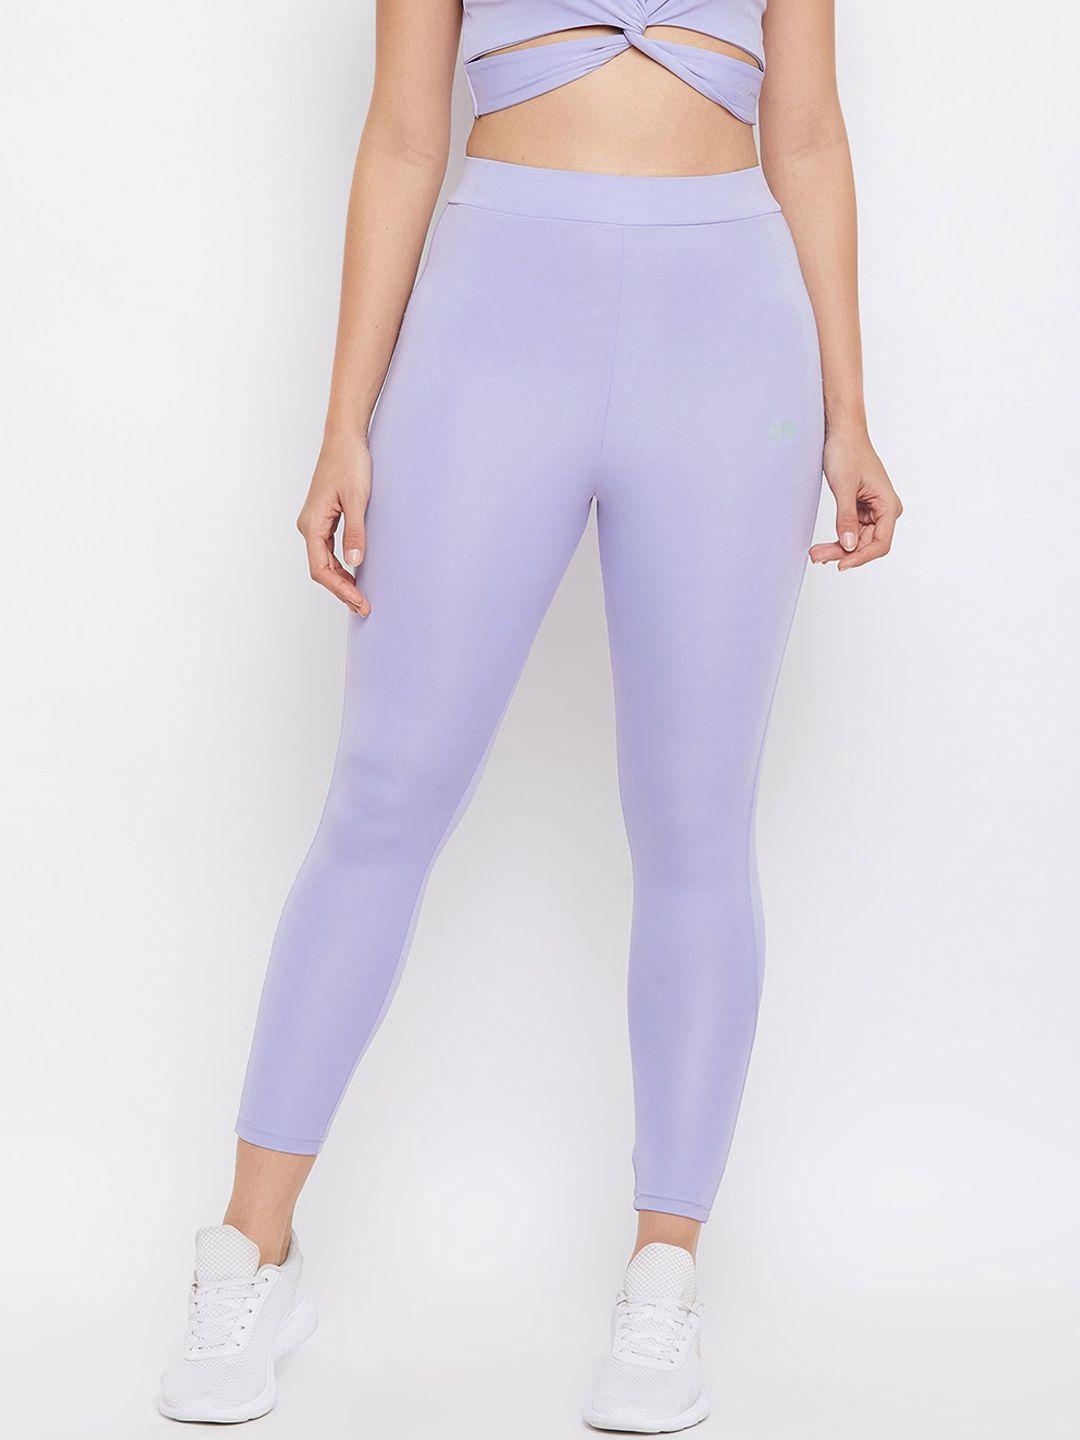 clovia women purple solid tights